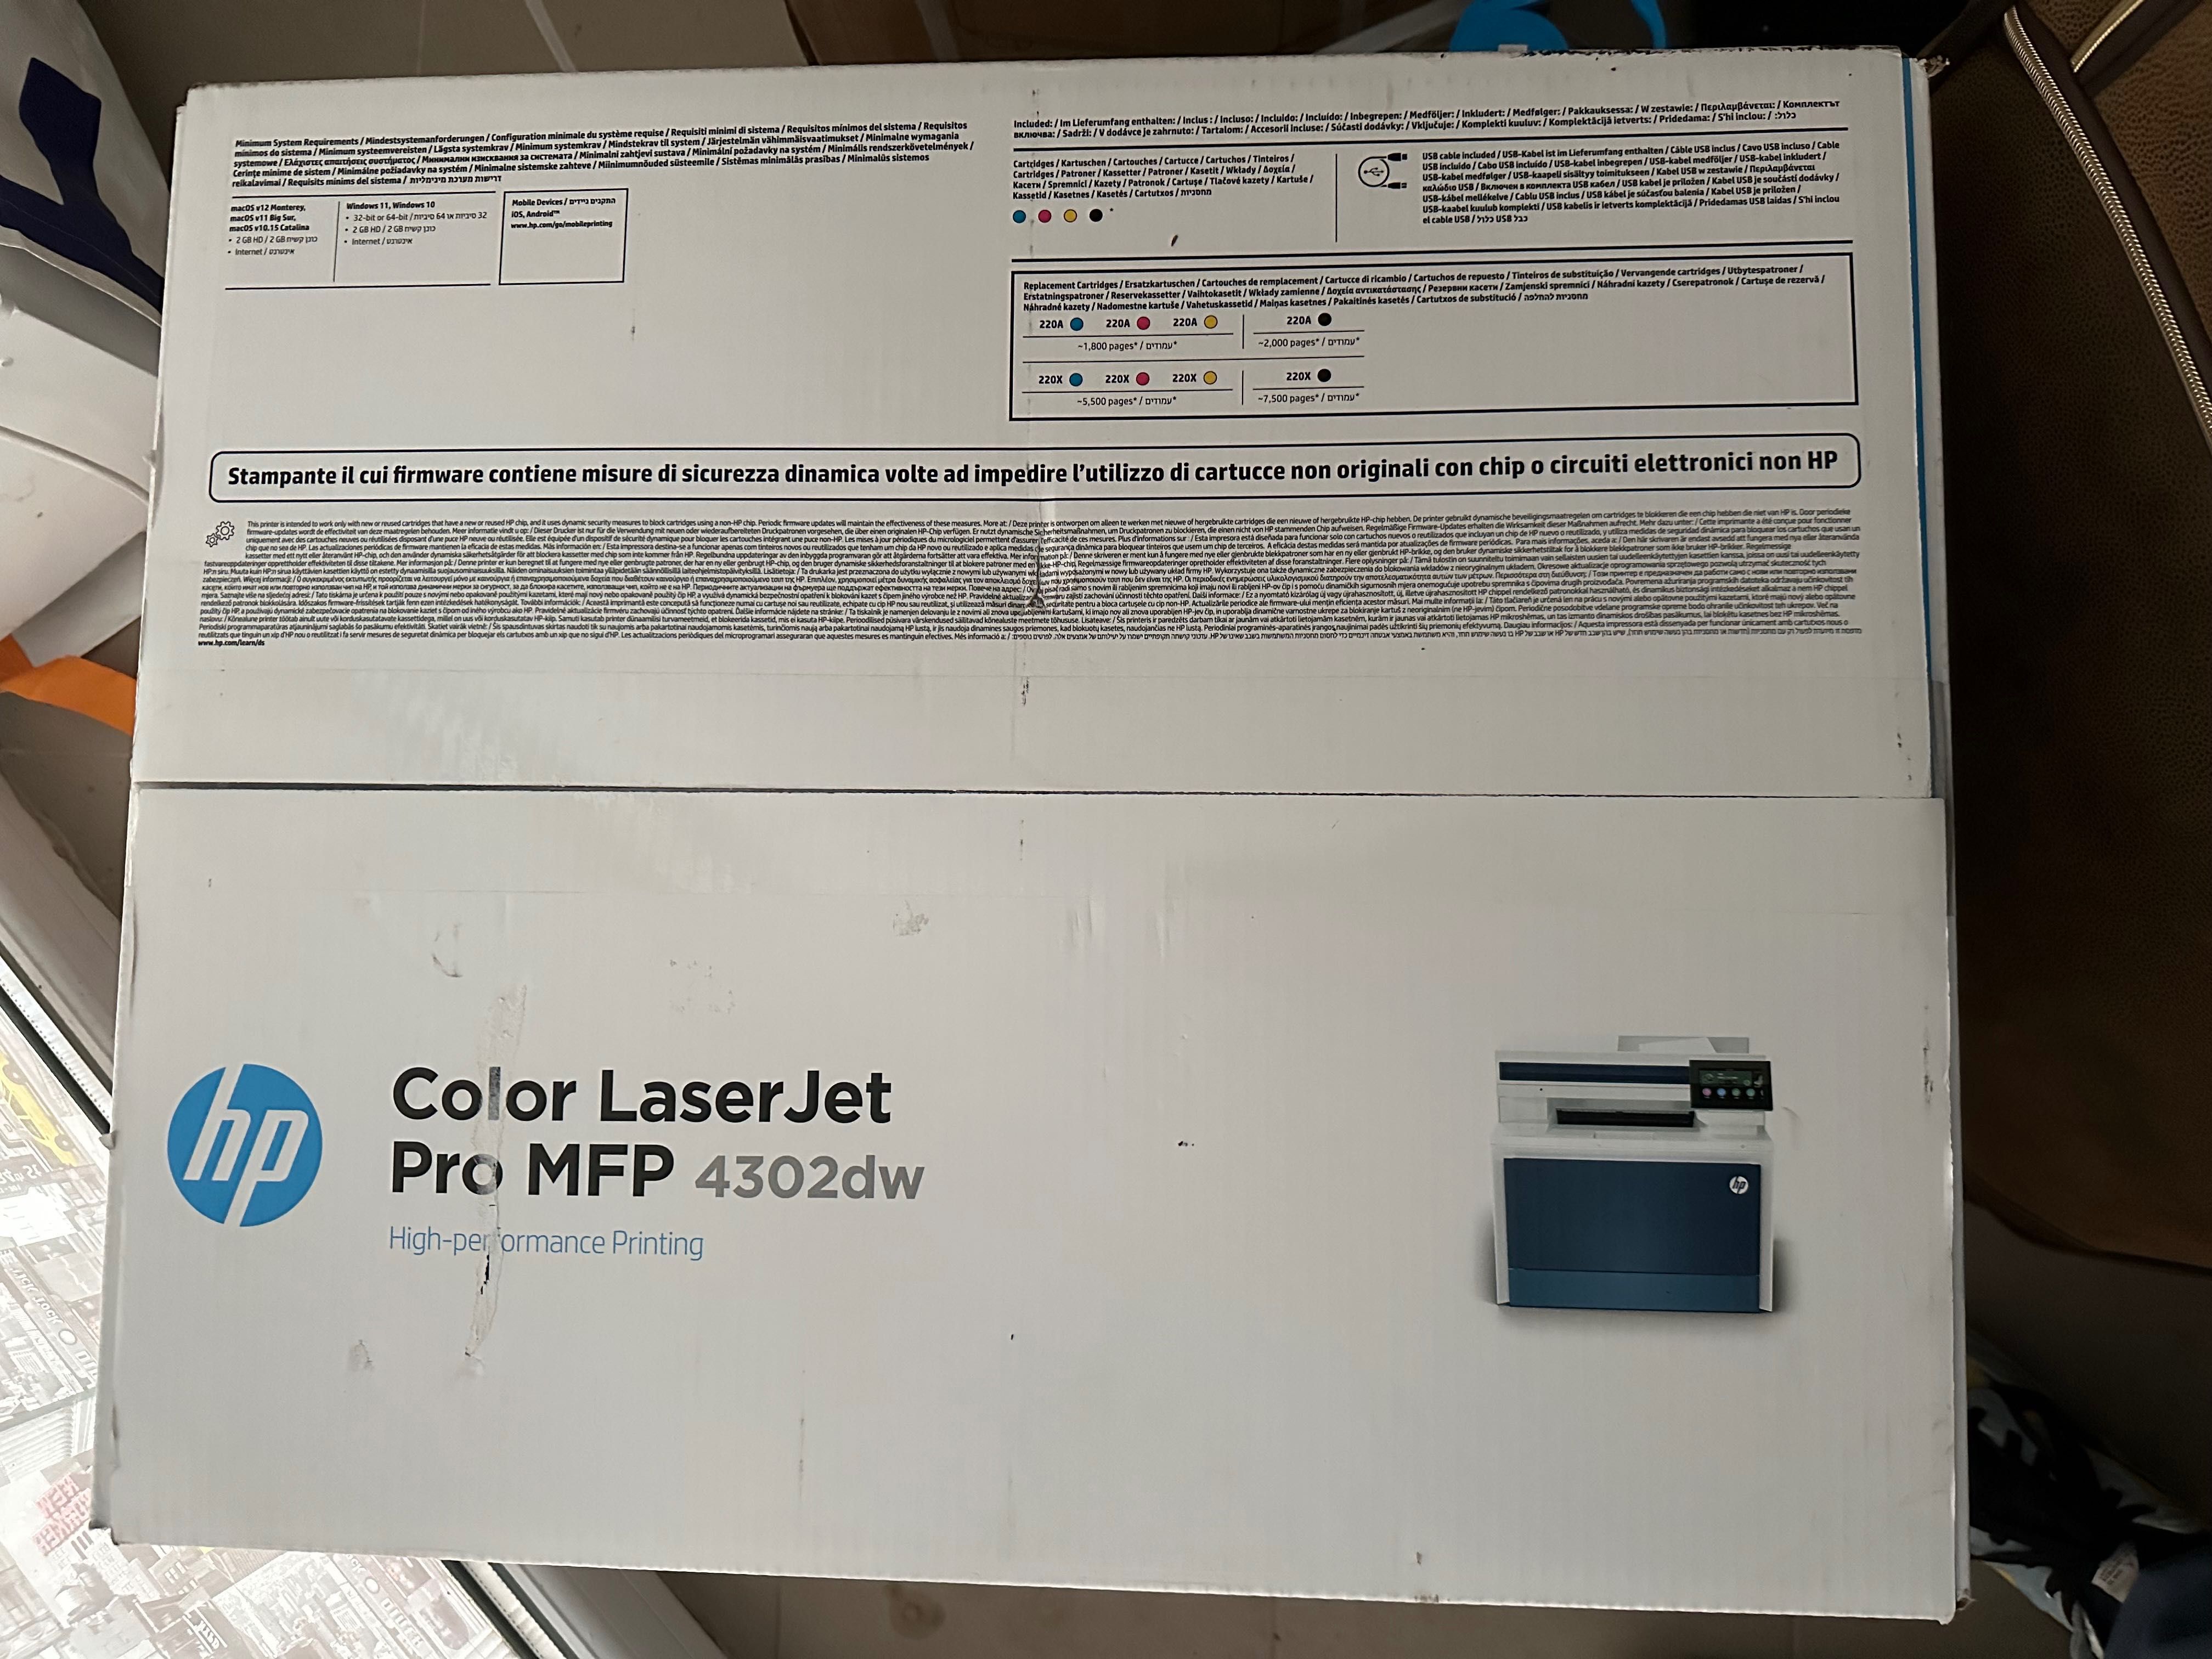 Color LaserJet
Pro MFP